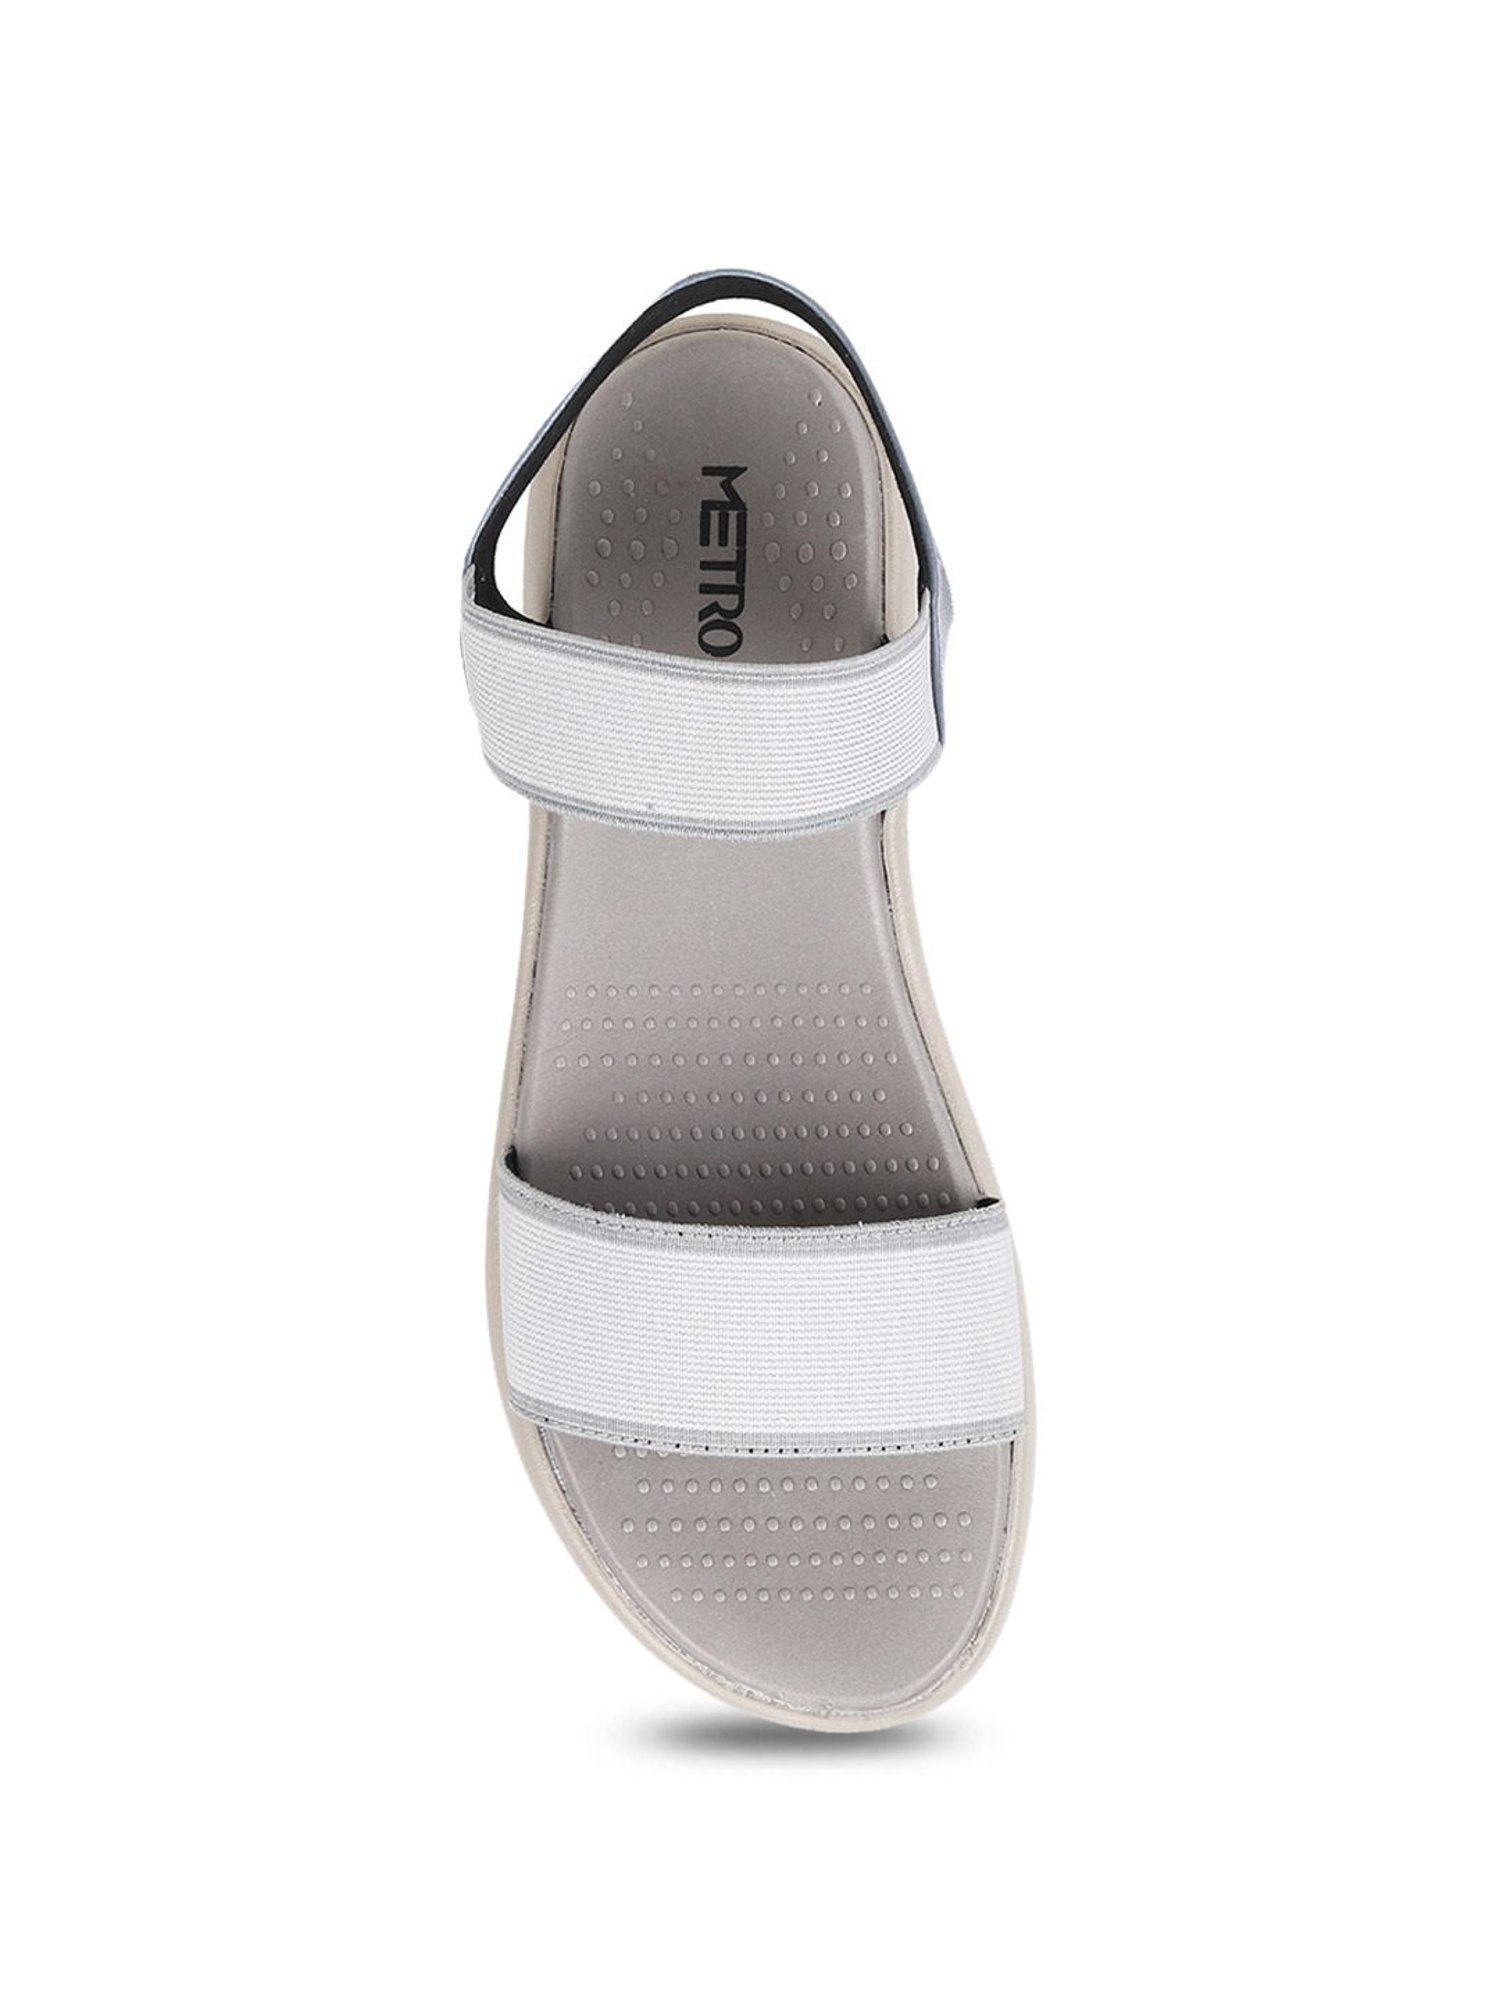 Buy Cream Flat Sandals for Women by Metro Online | Ajio.com